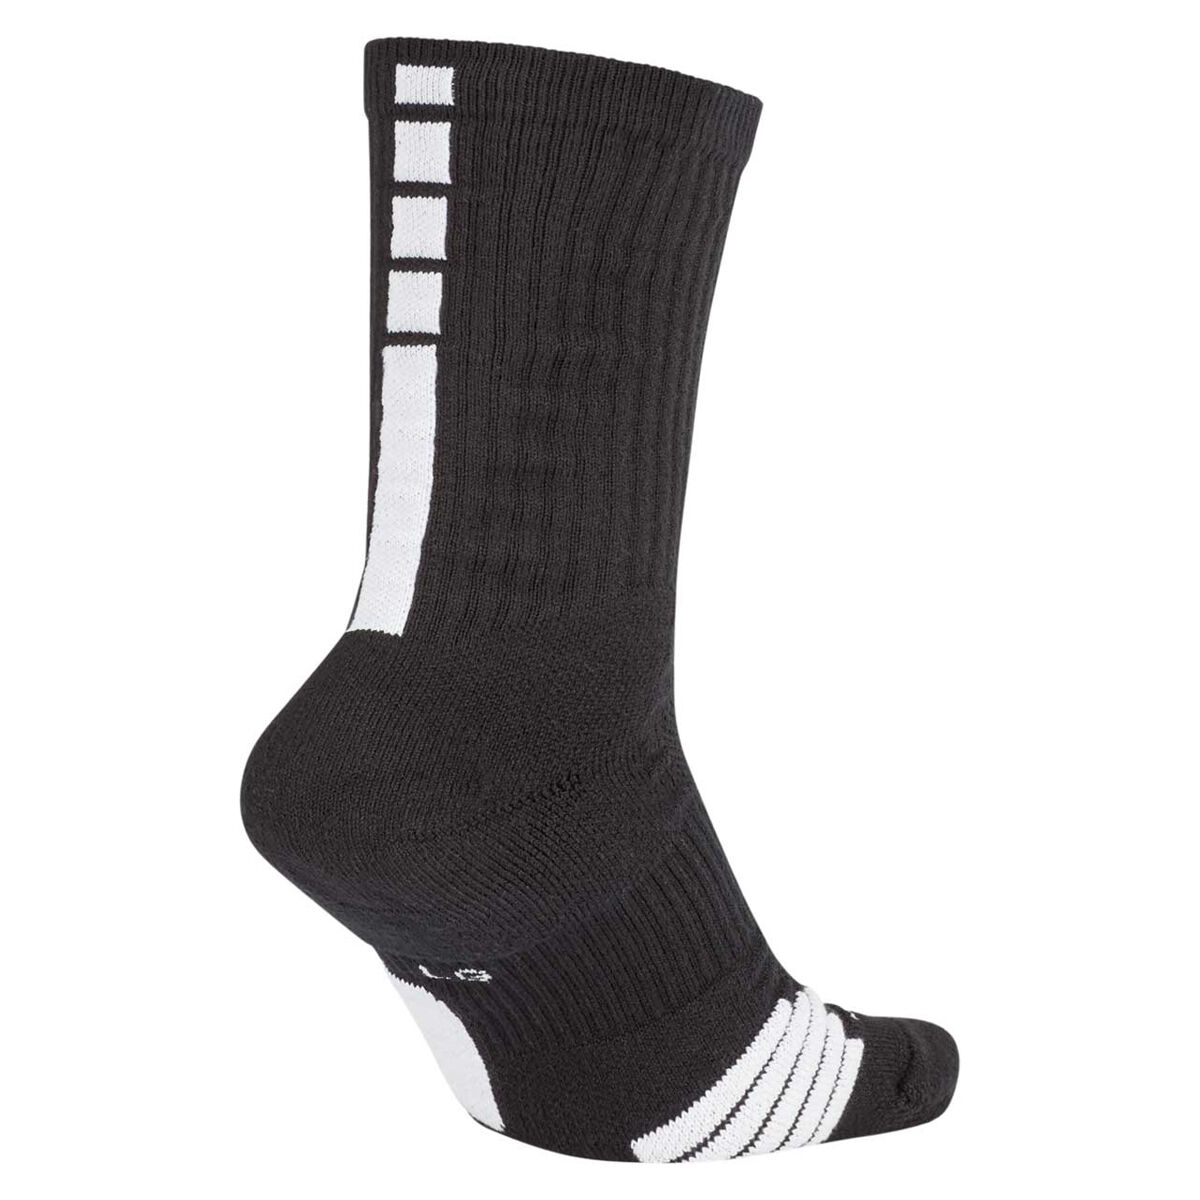 how much are nike elite socks